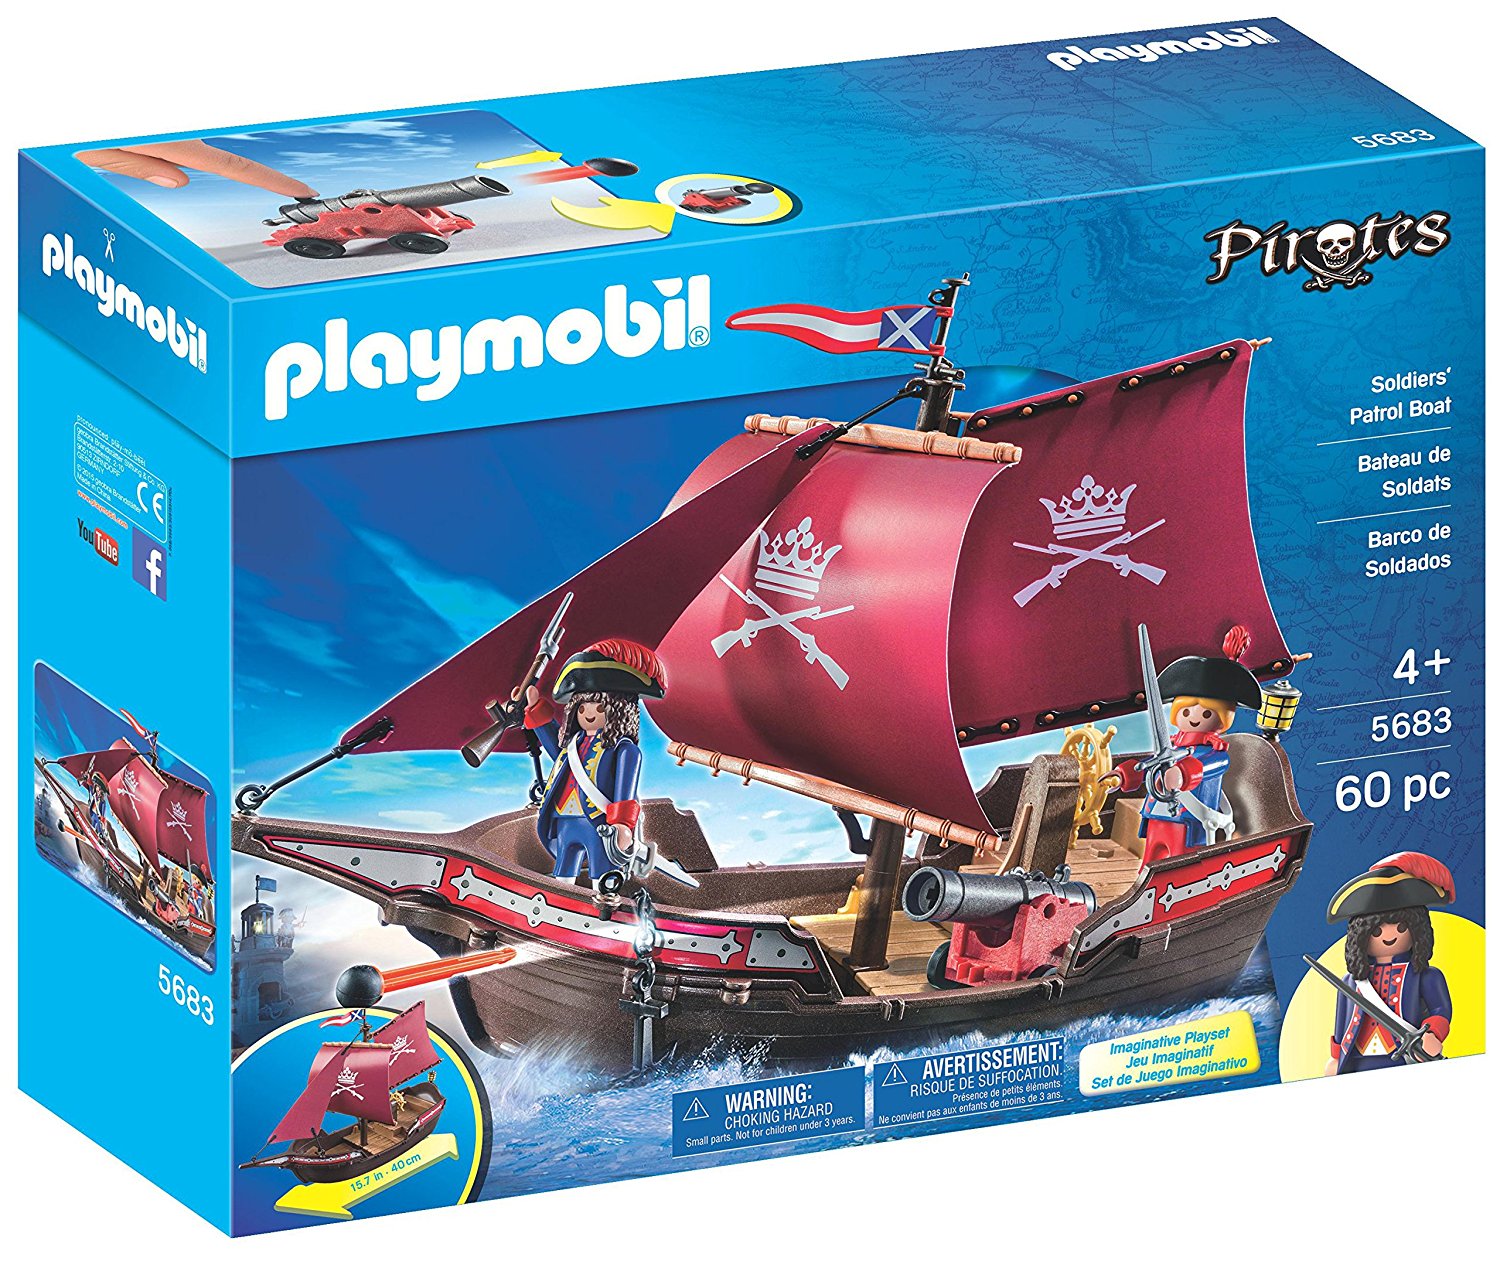 Playmobil Pirate Raft Carry Case Playset